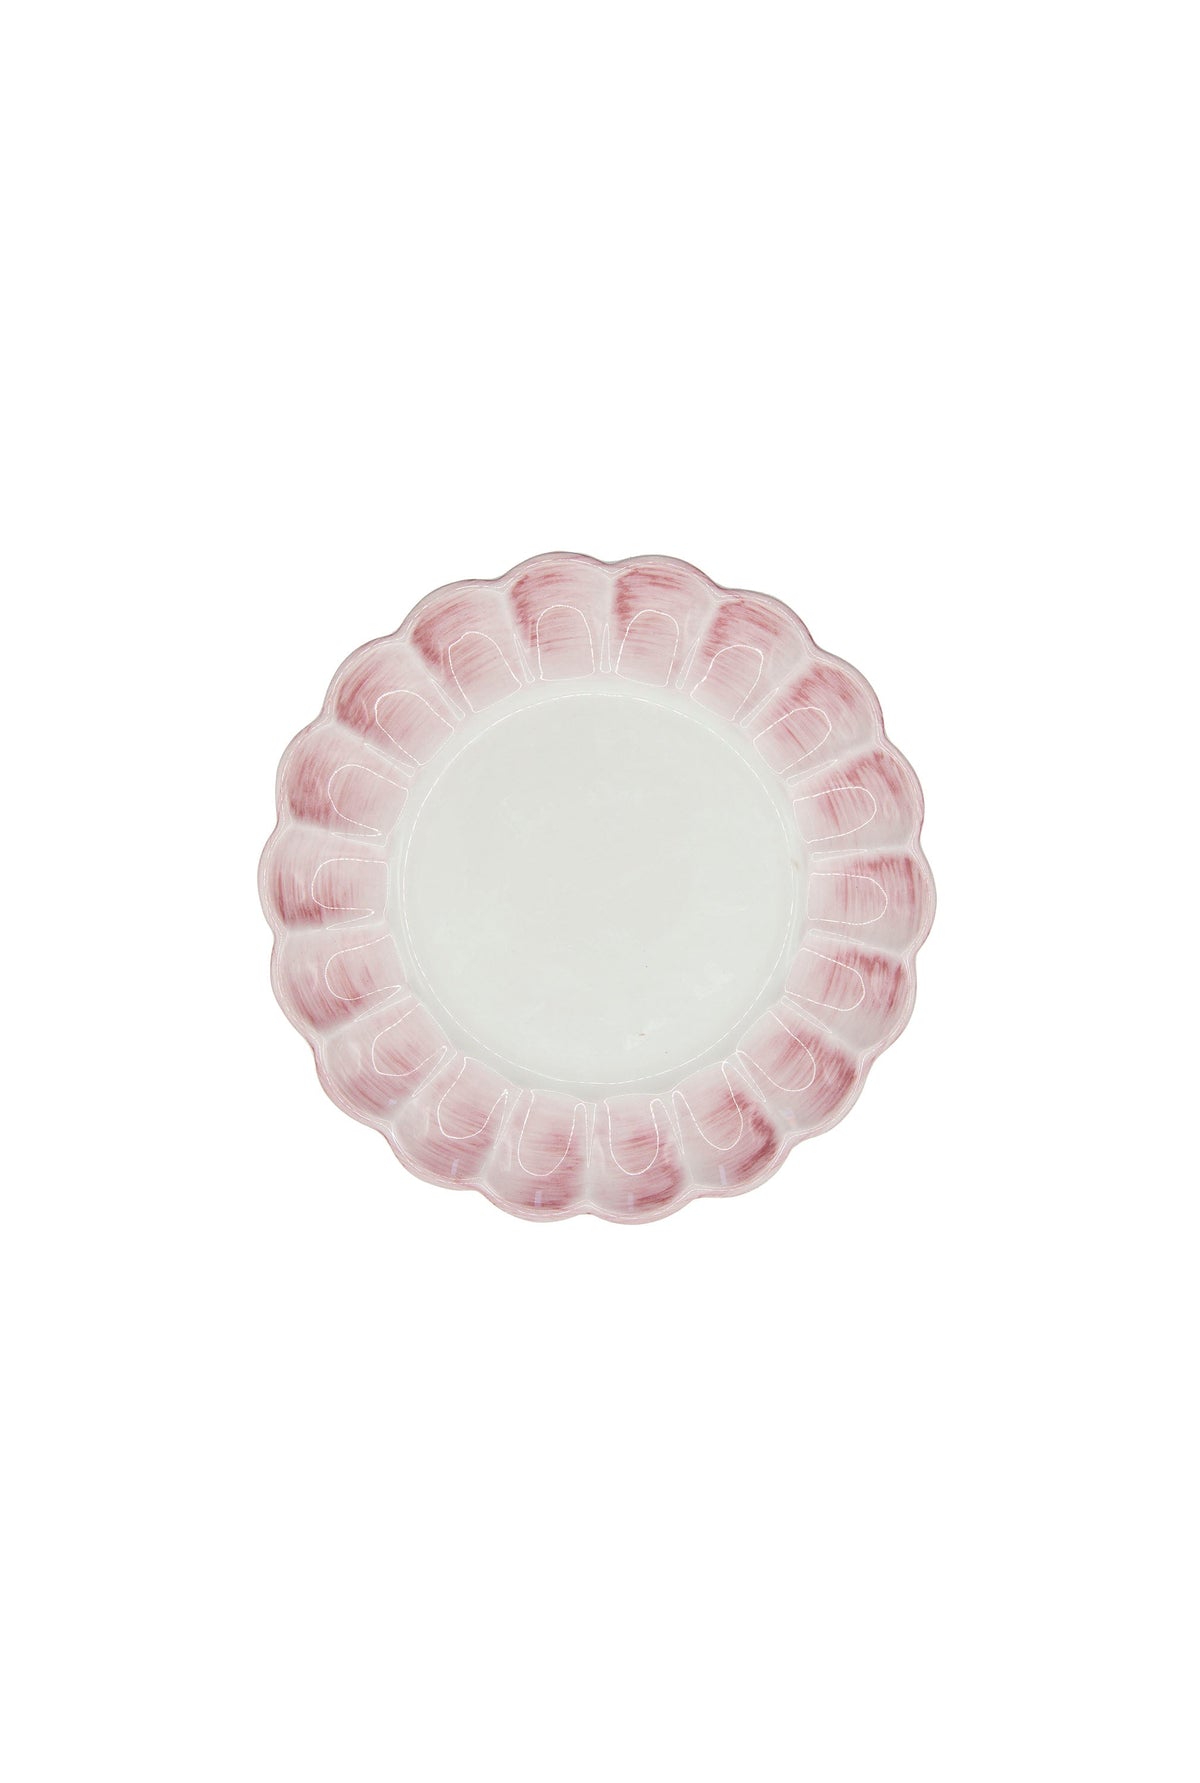 Lido Side Plate, Pink, Set of 4 - Skye McAlpine Tavola